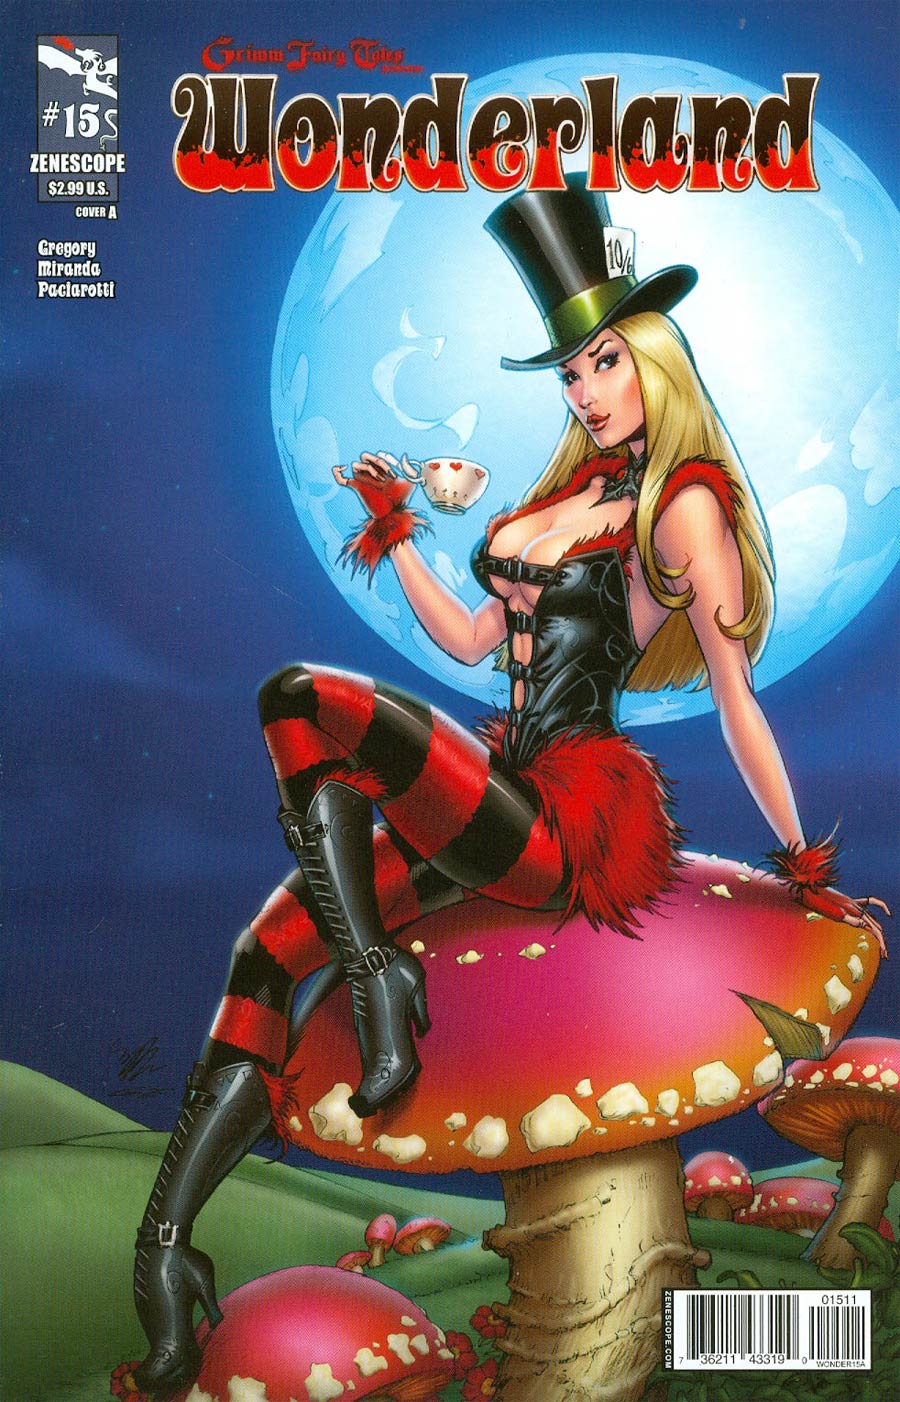 Grimm Fairy Tales Presents Wonderland Vol 2 #15 Cover A Michael Dooney